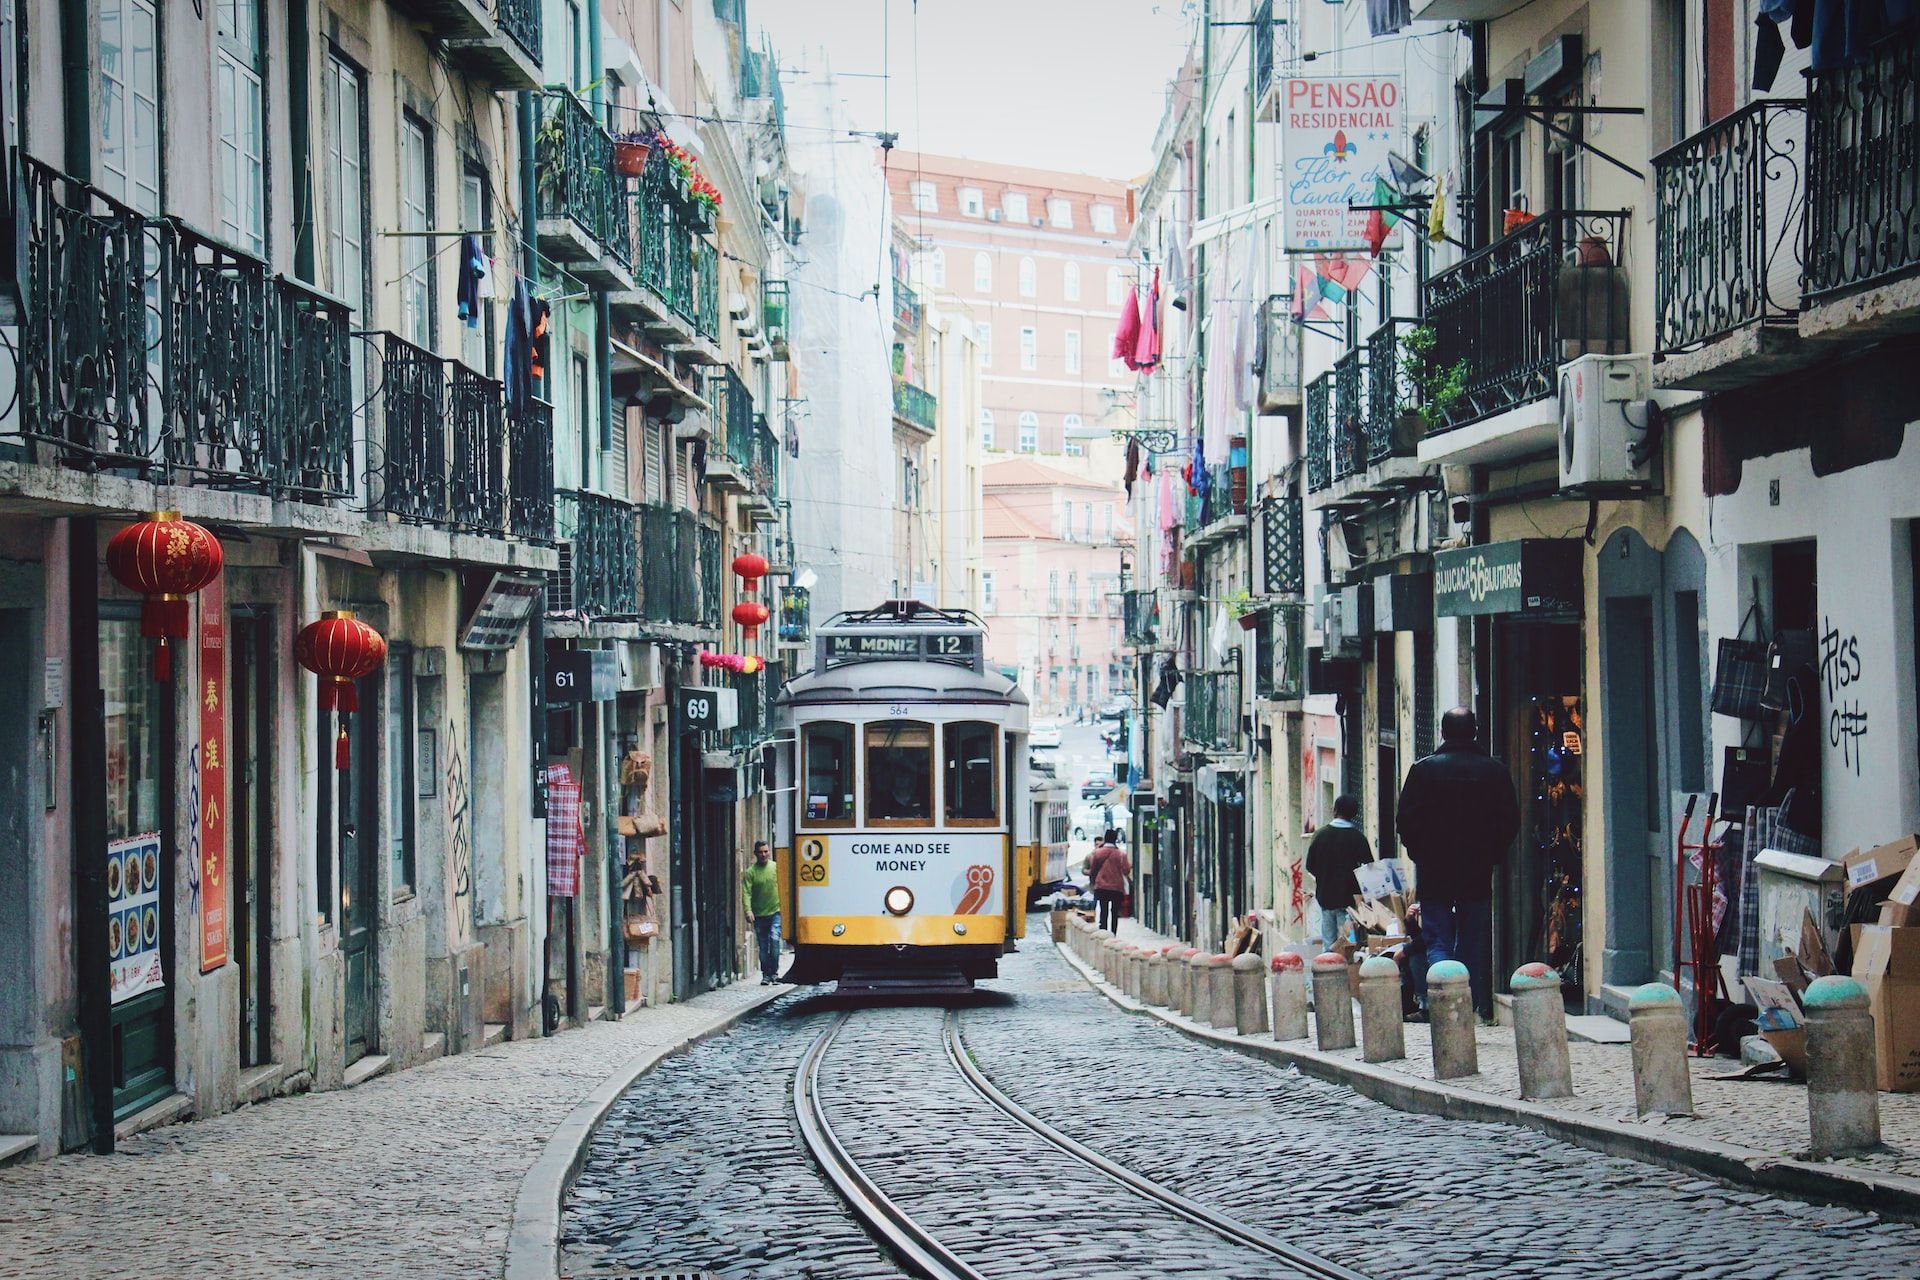 tram through narrow streets in Lisbon